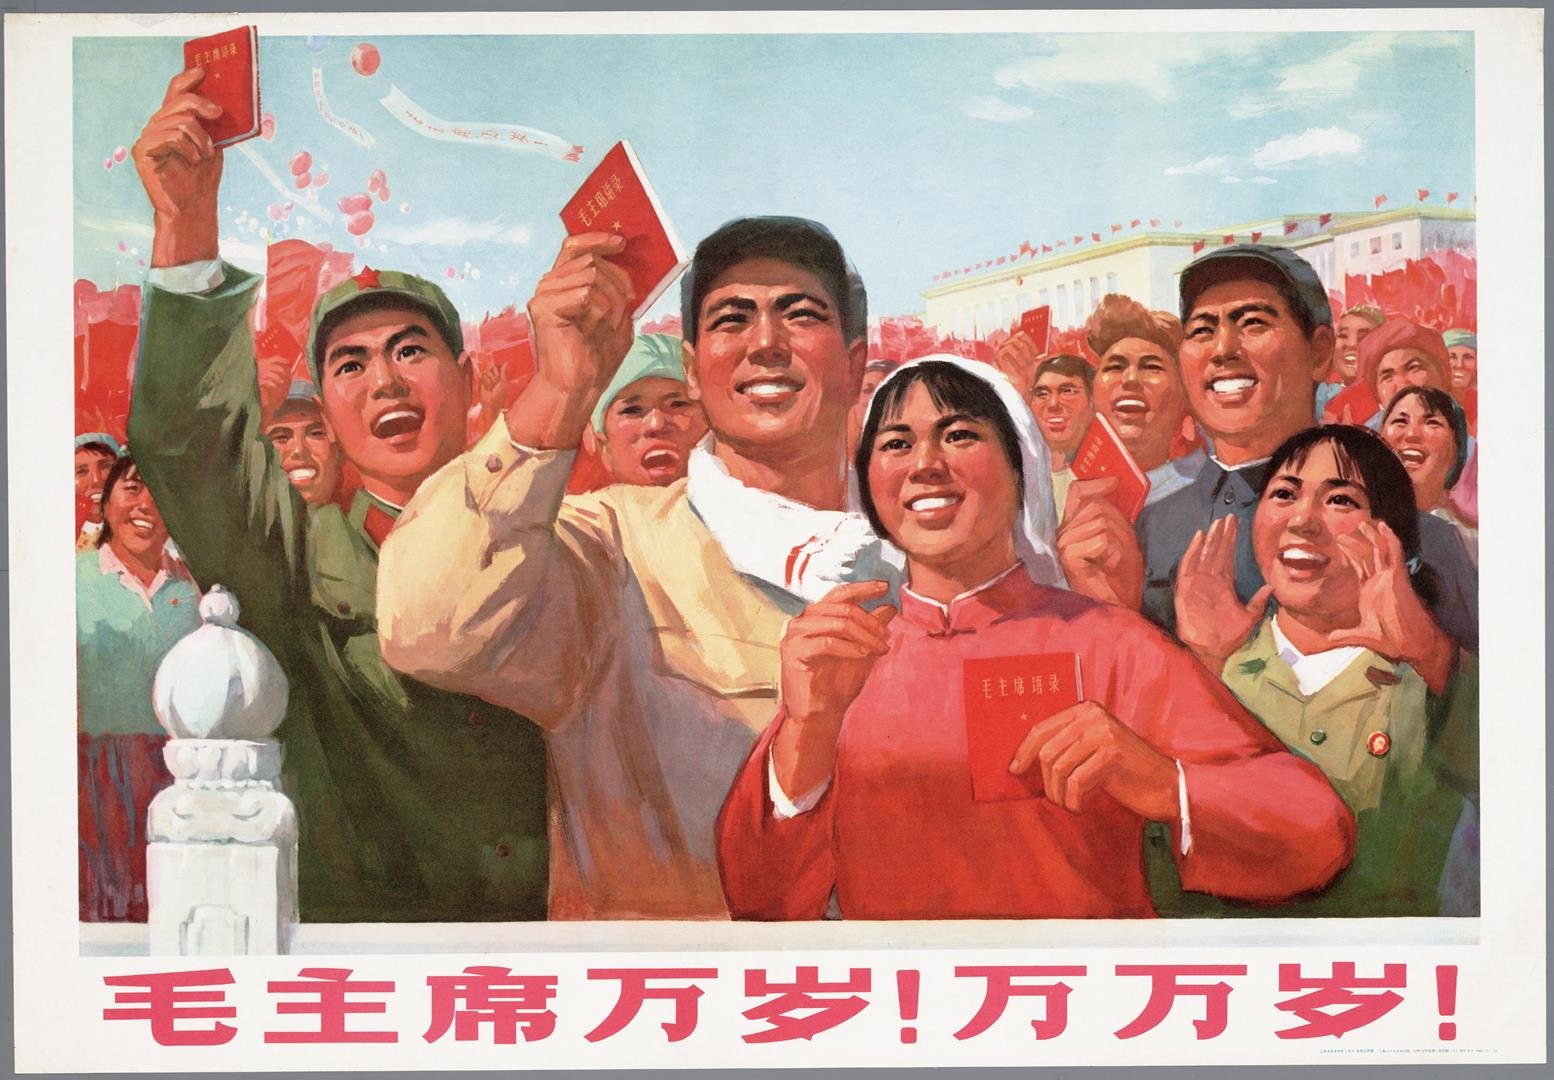 4. Long live chairman Mao - LR.jpg